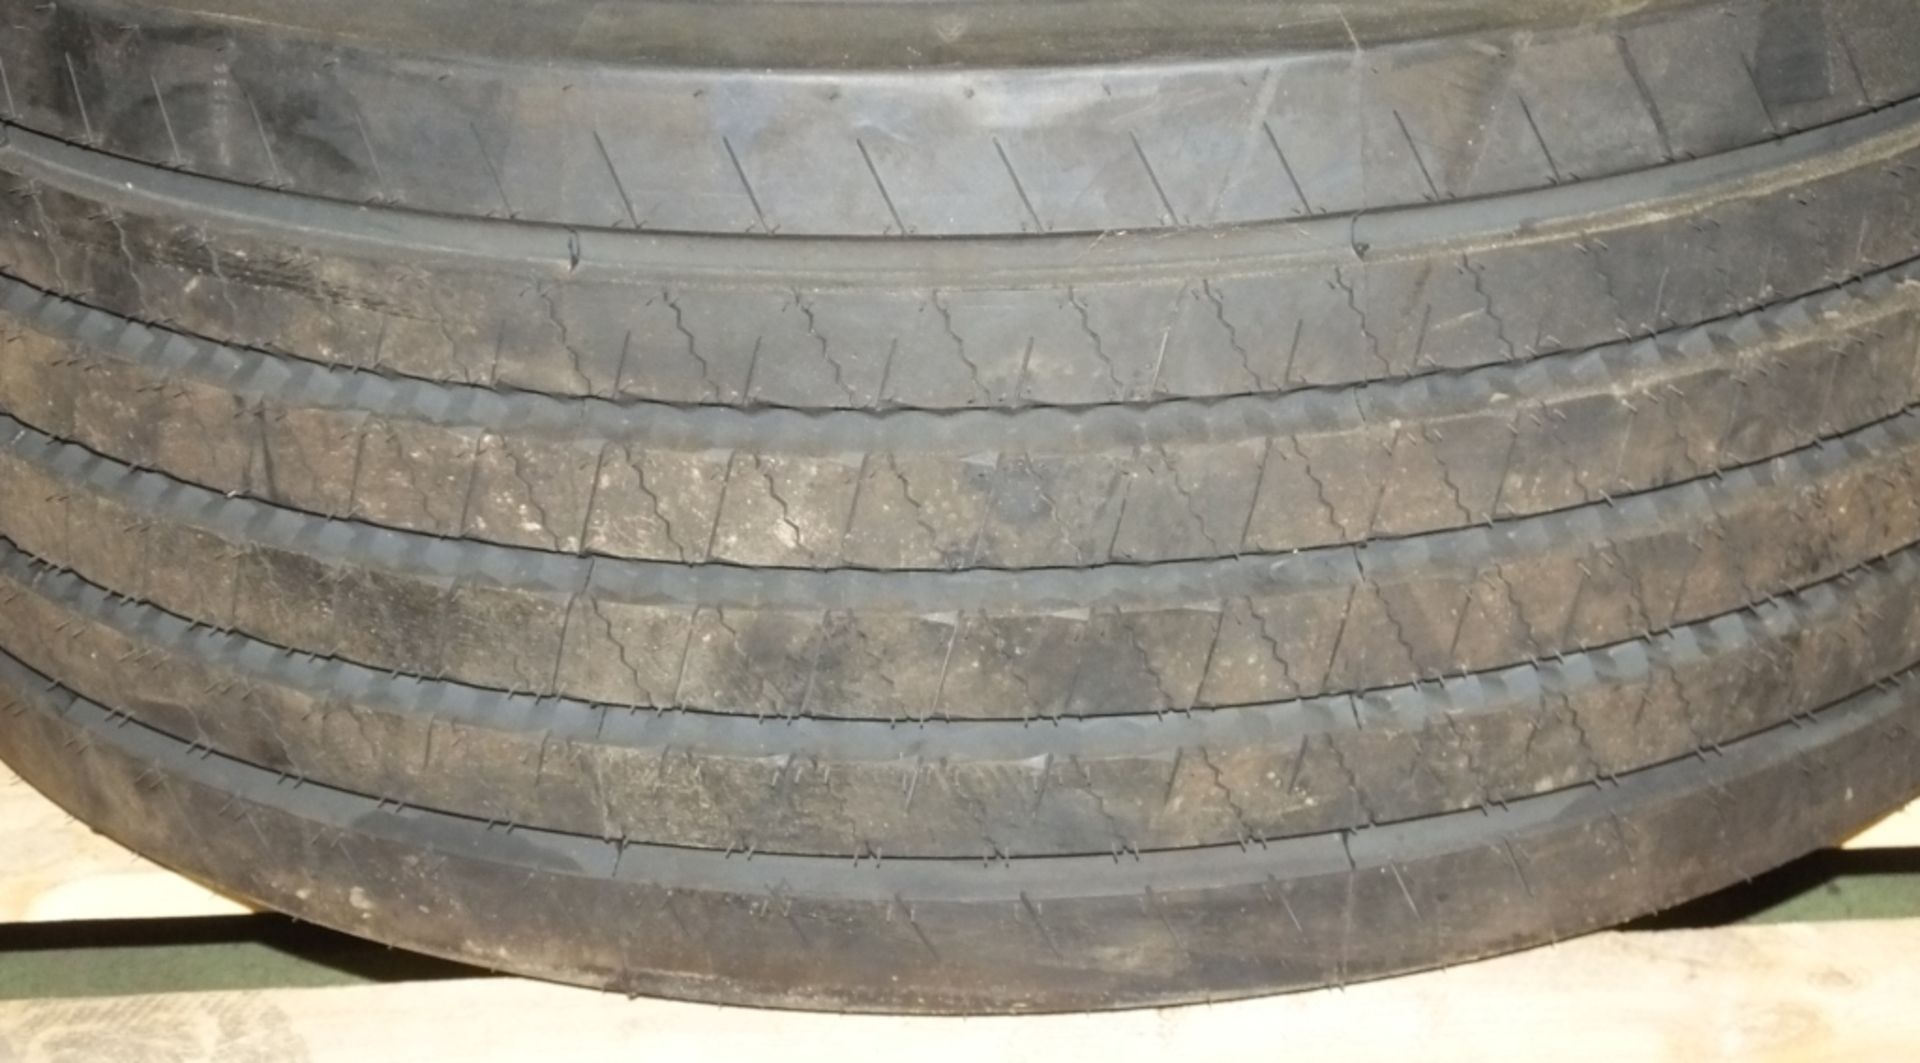 Barum BF 200 Road tire - 385/55 R 22.5 (new & unused) - Image 2 of 7